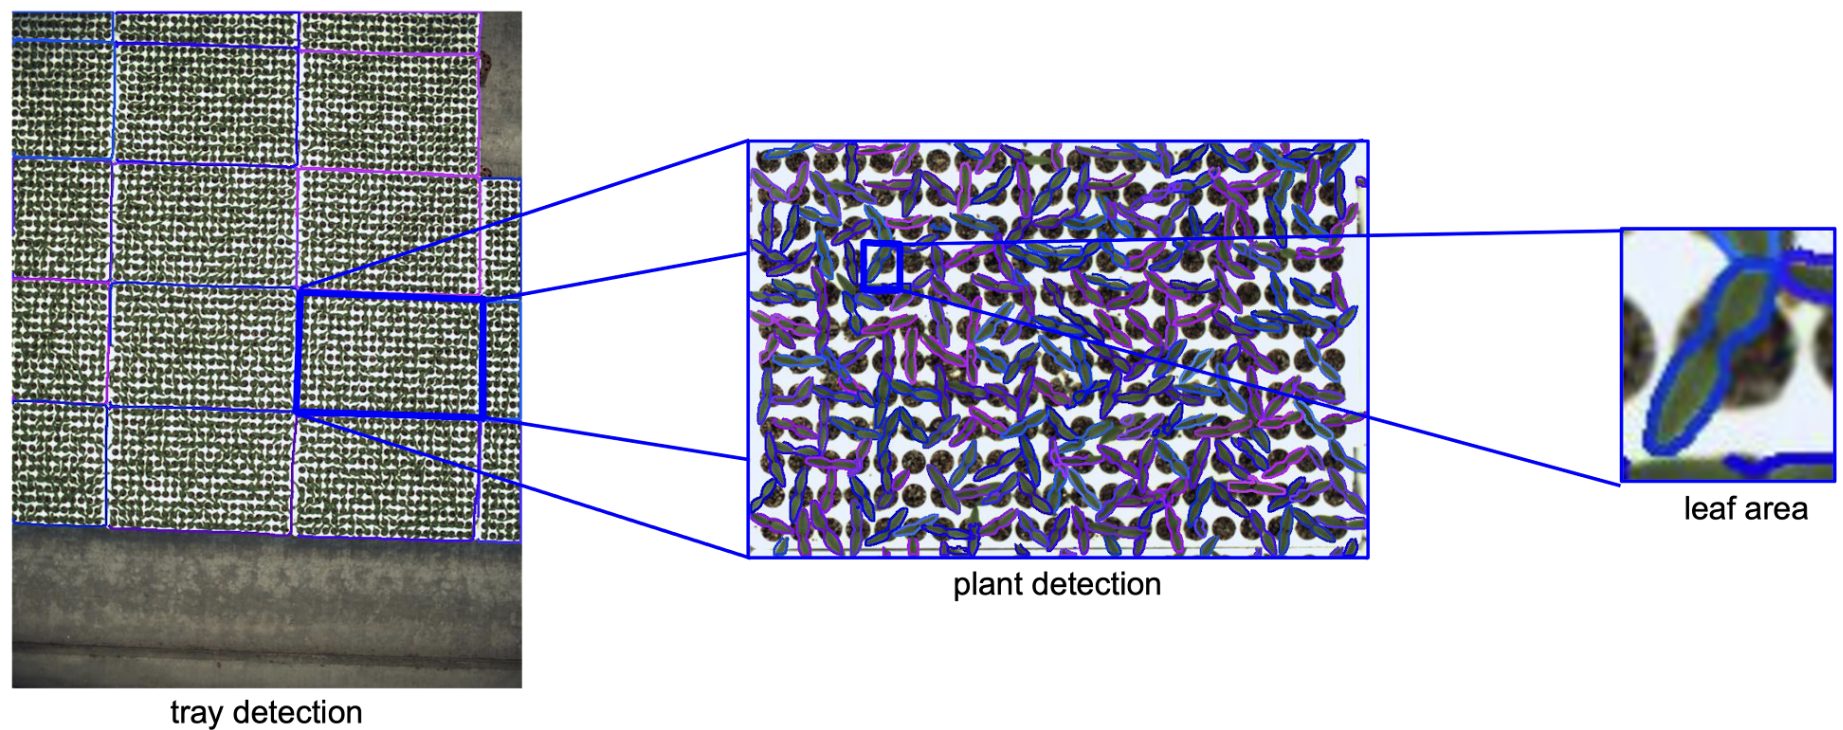 Plant detection